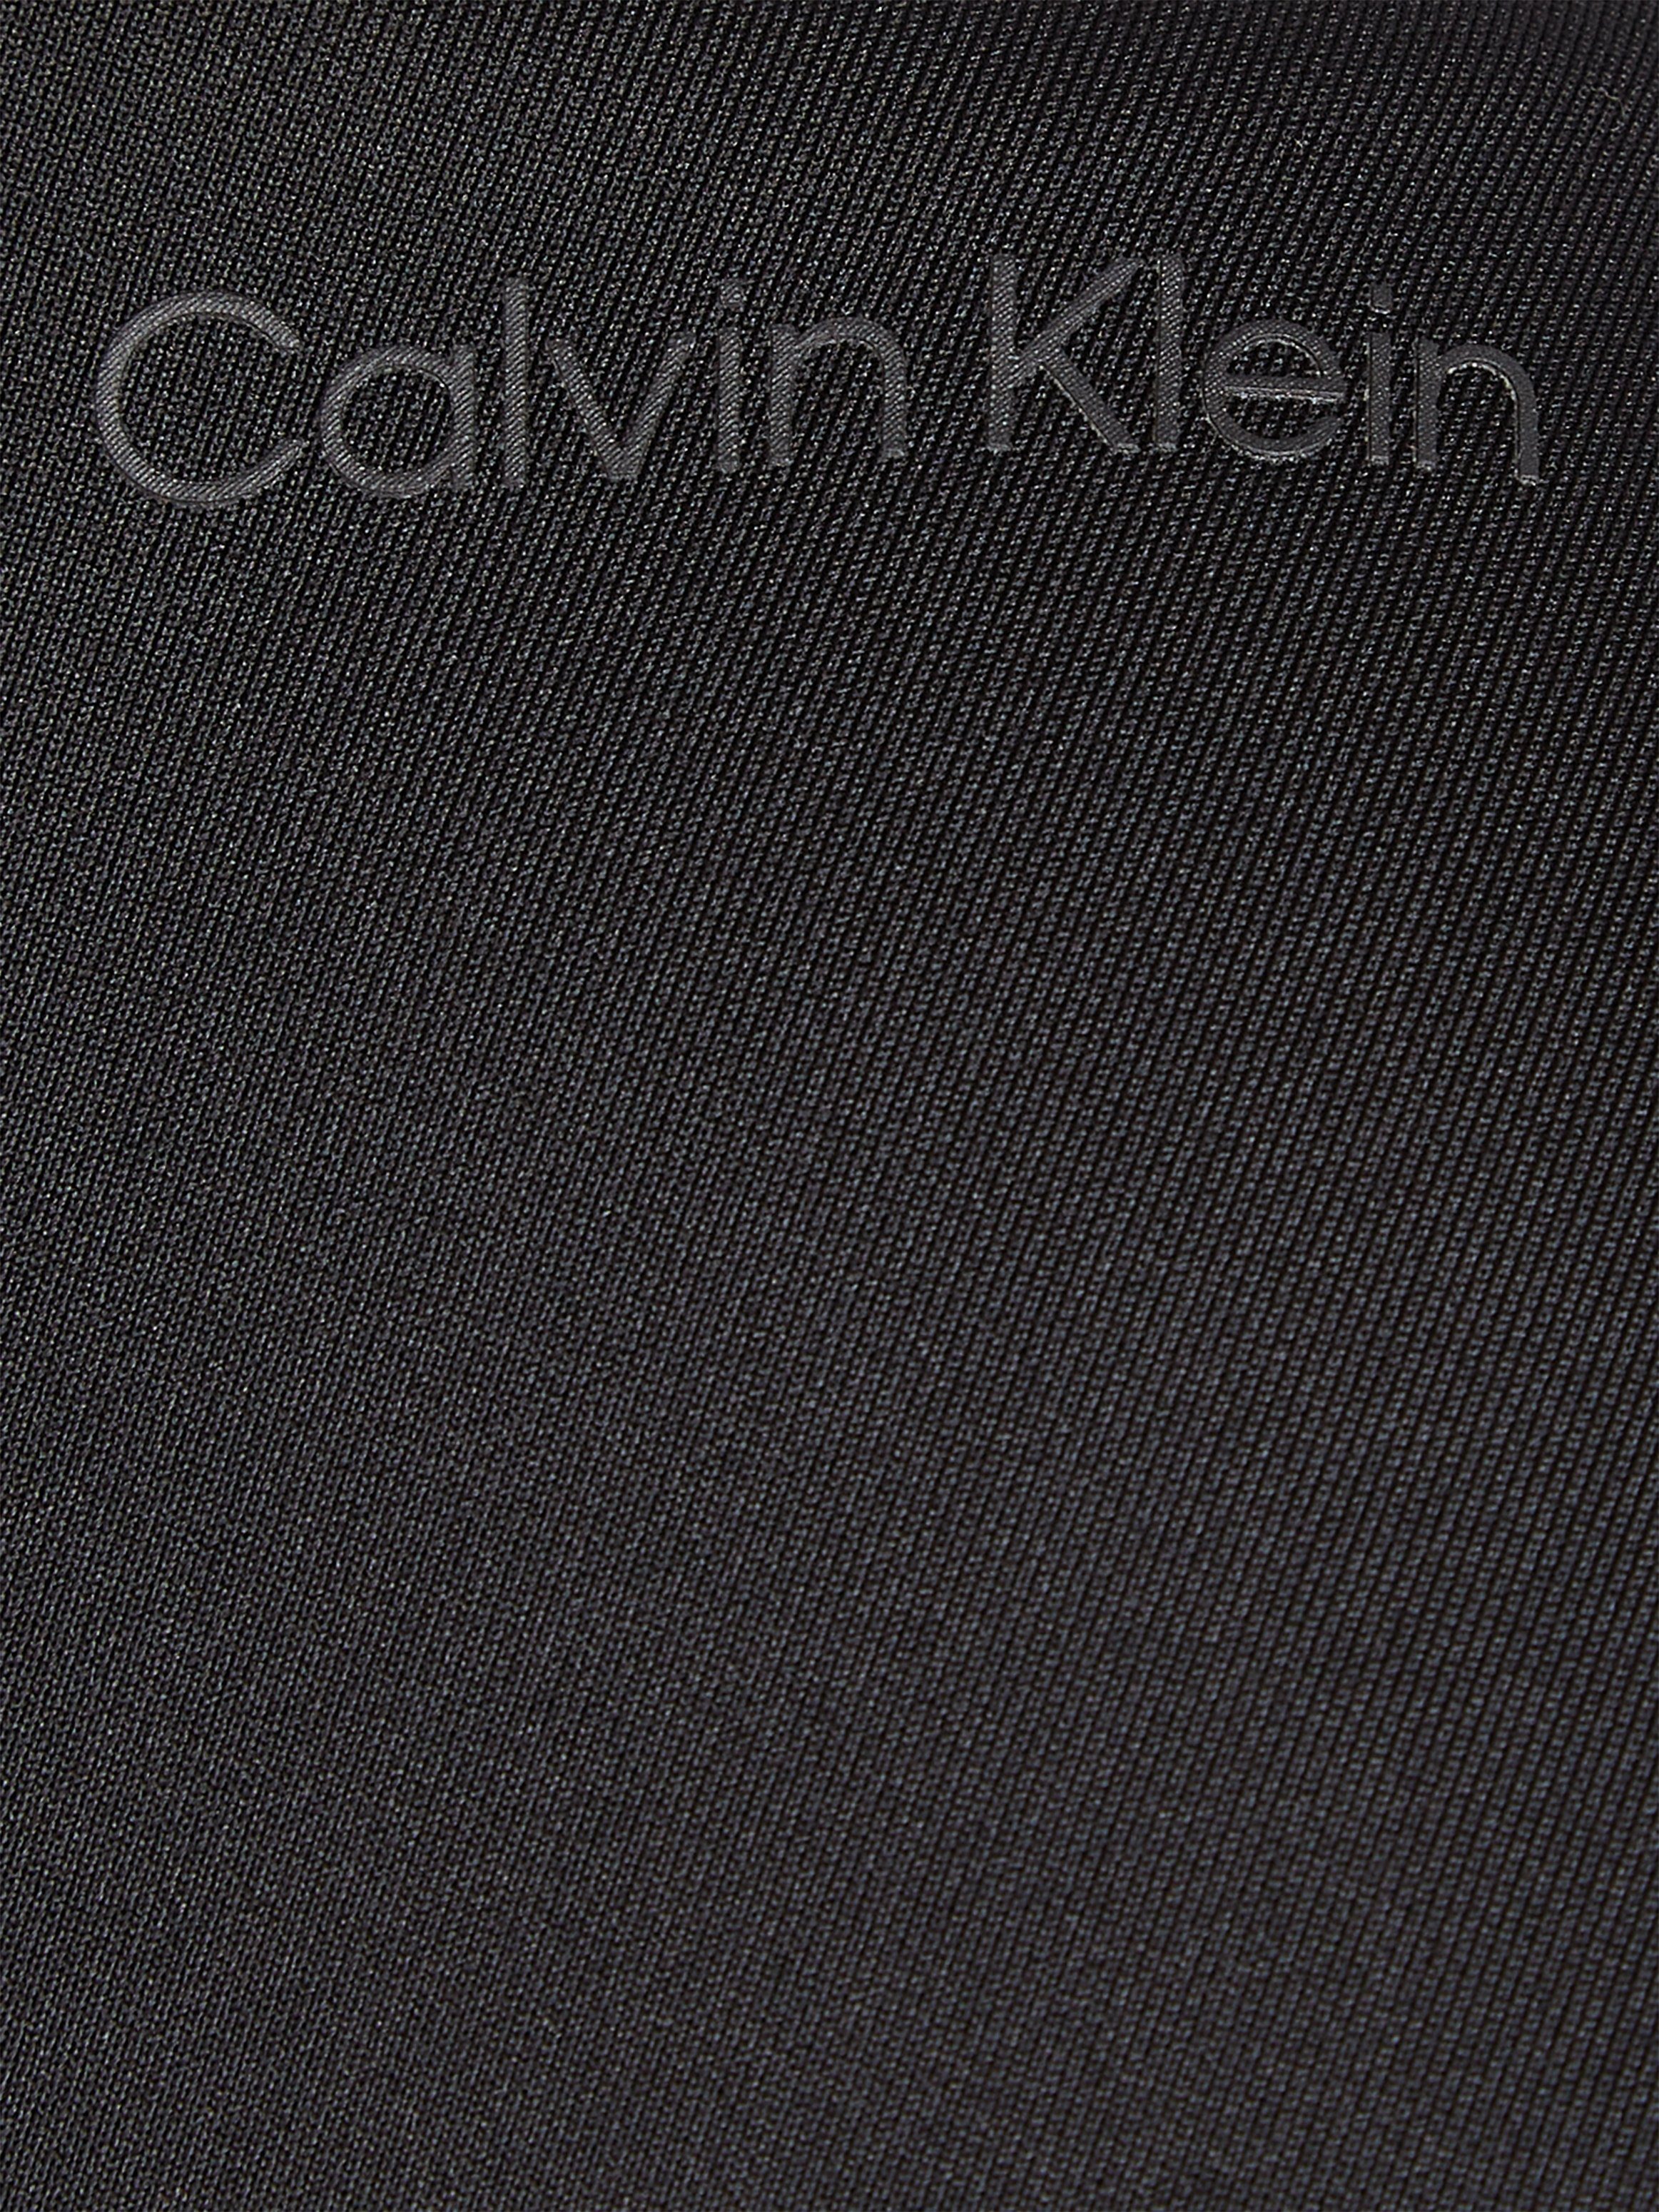 Etuikleid MINI TECHNICAL Calvin KNIT DRESS Klein TANK